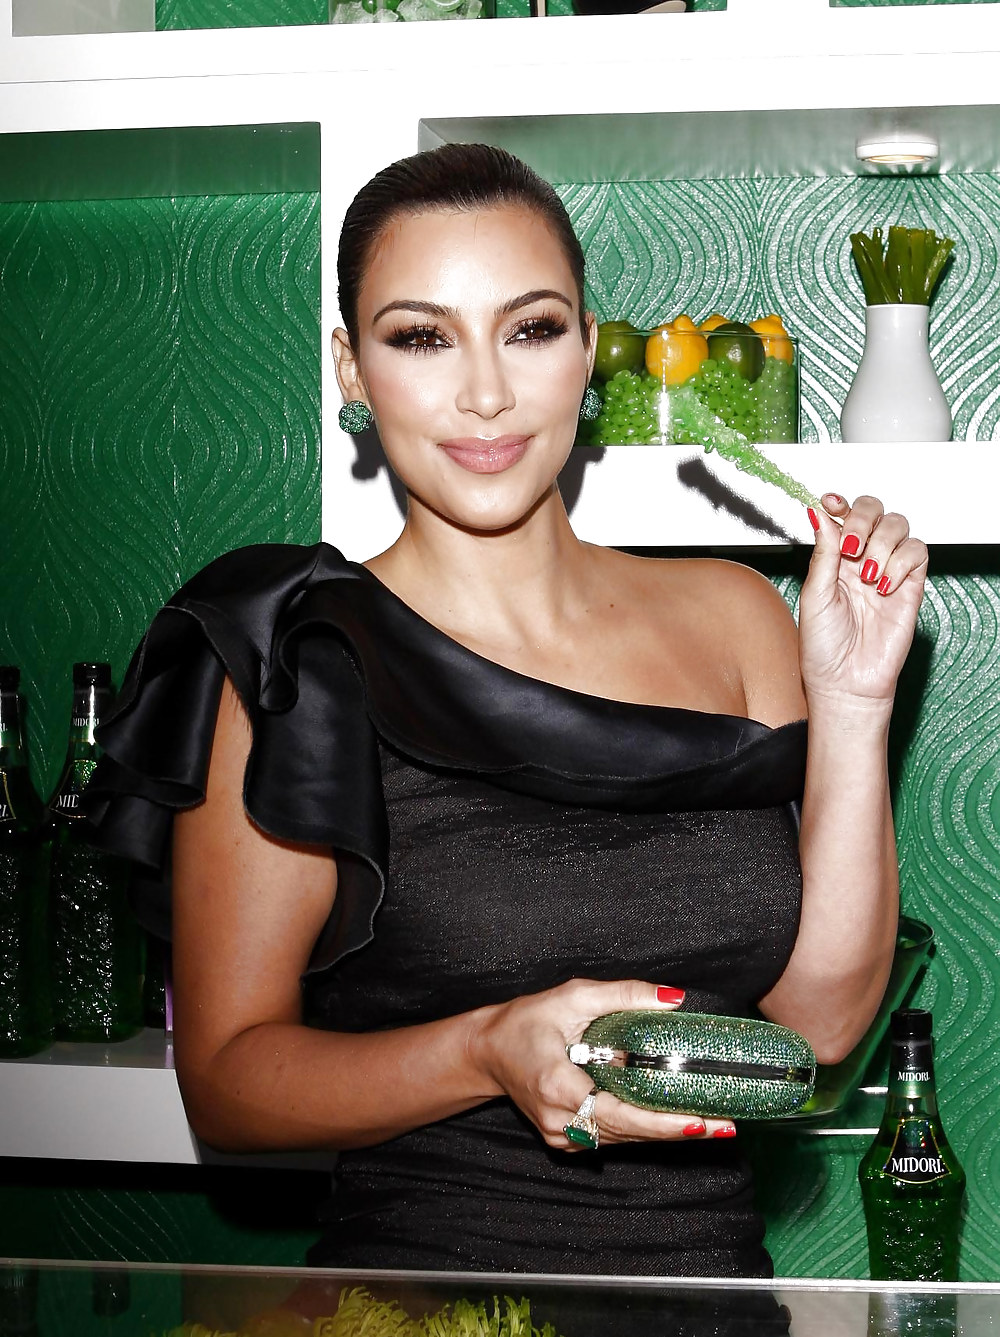 Kim Kardashian Midori Liqueur De Melon Tronc Spectacle #3767396